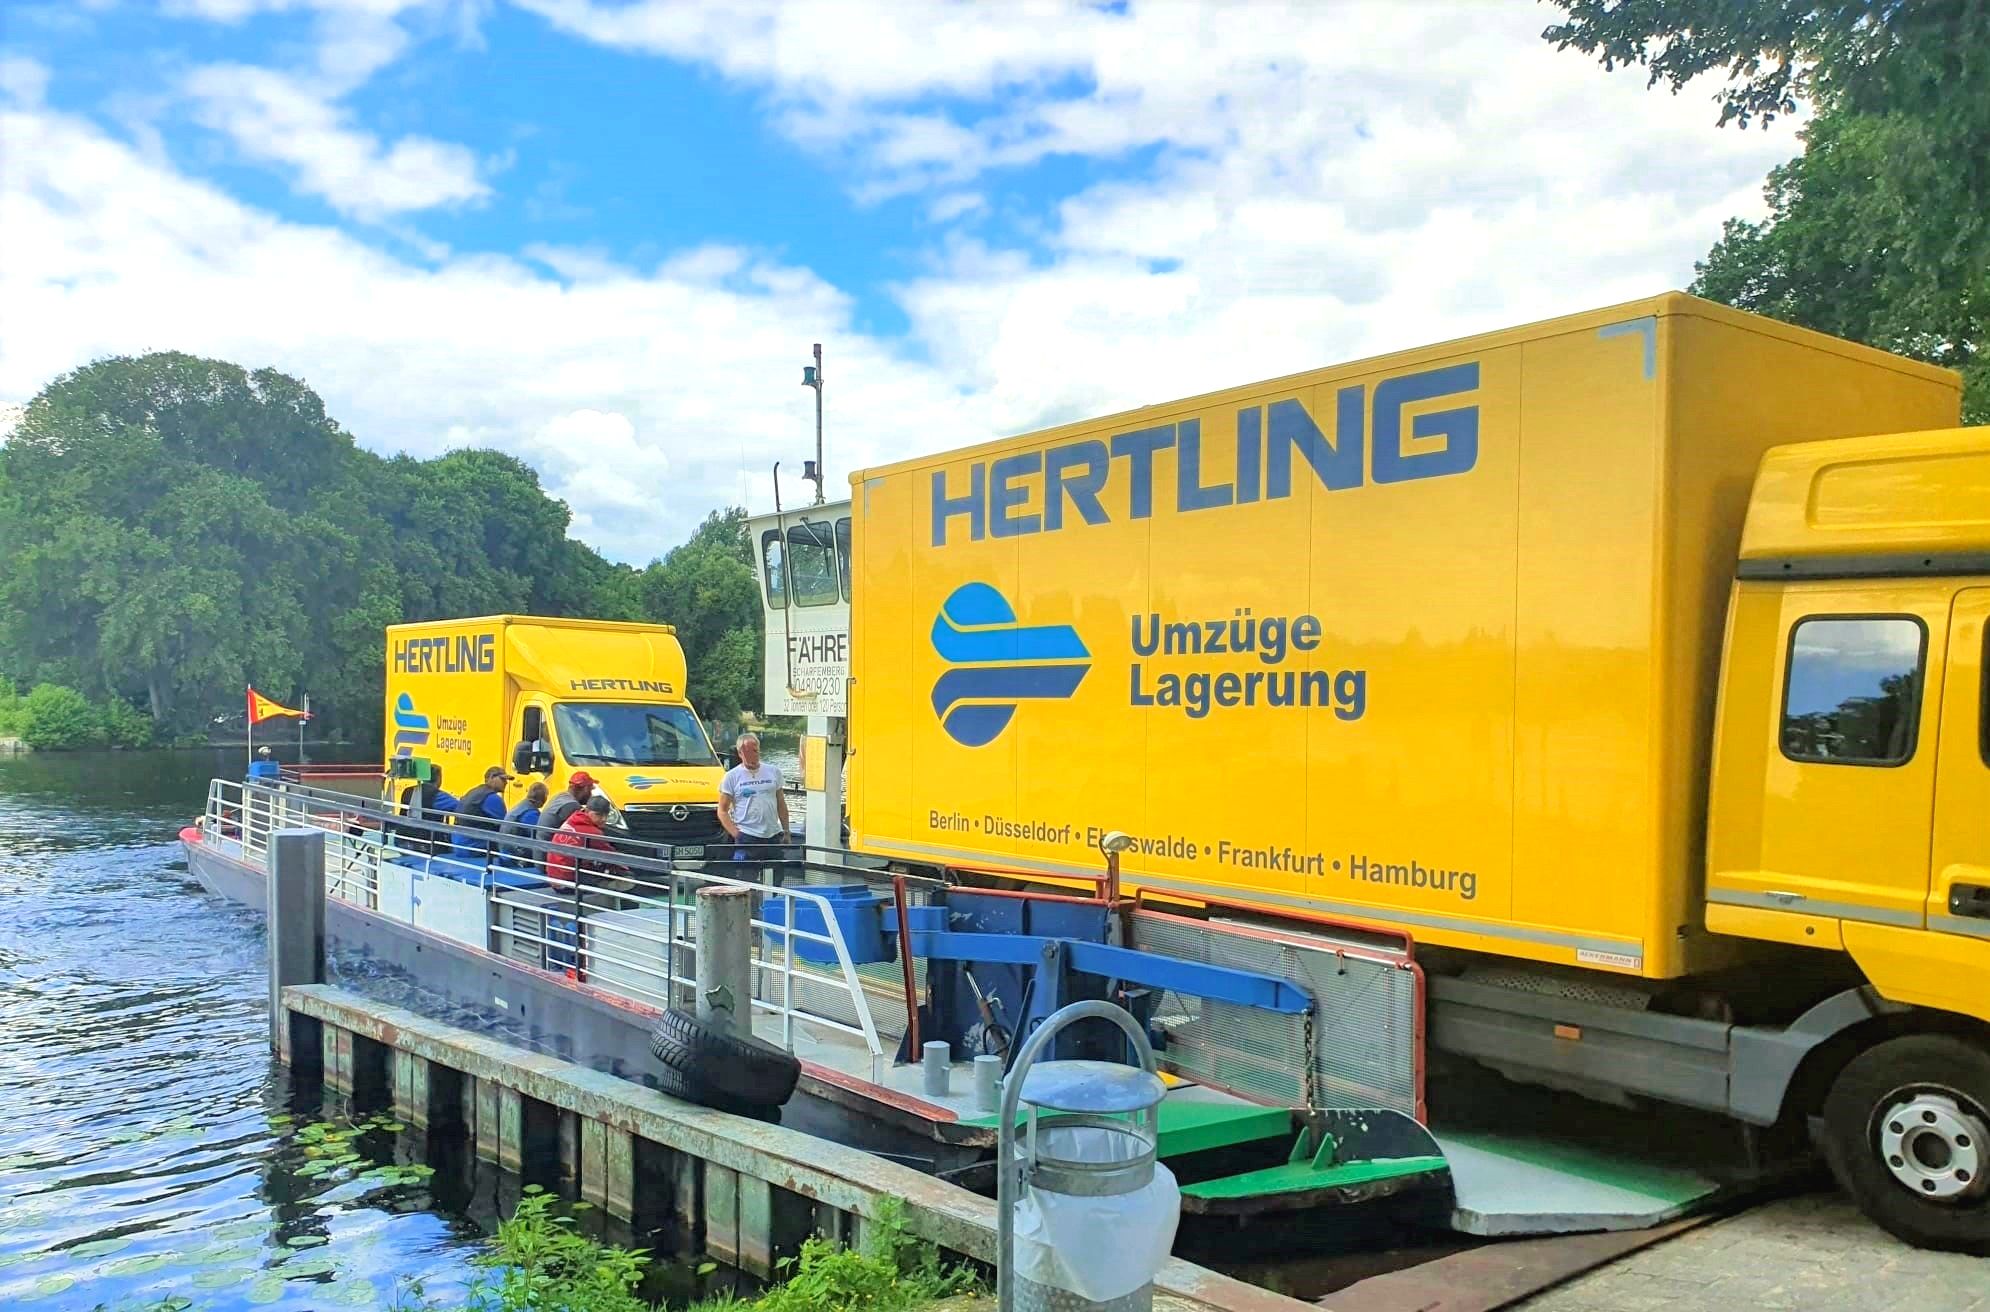 HERTLING move across the lake in Berlin